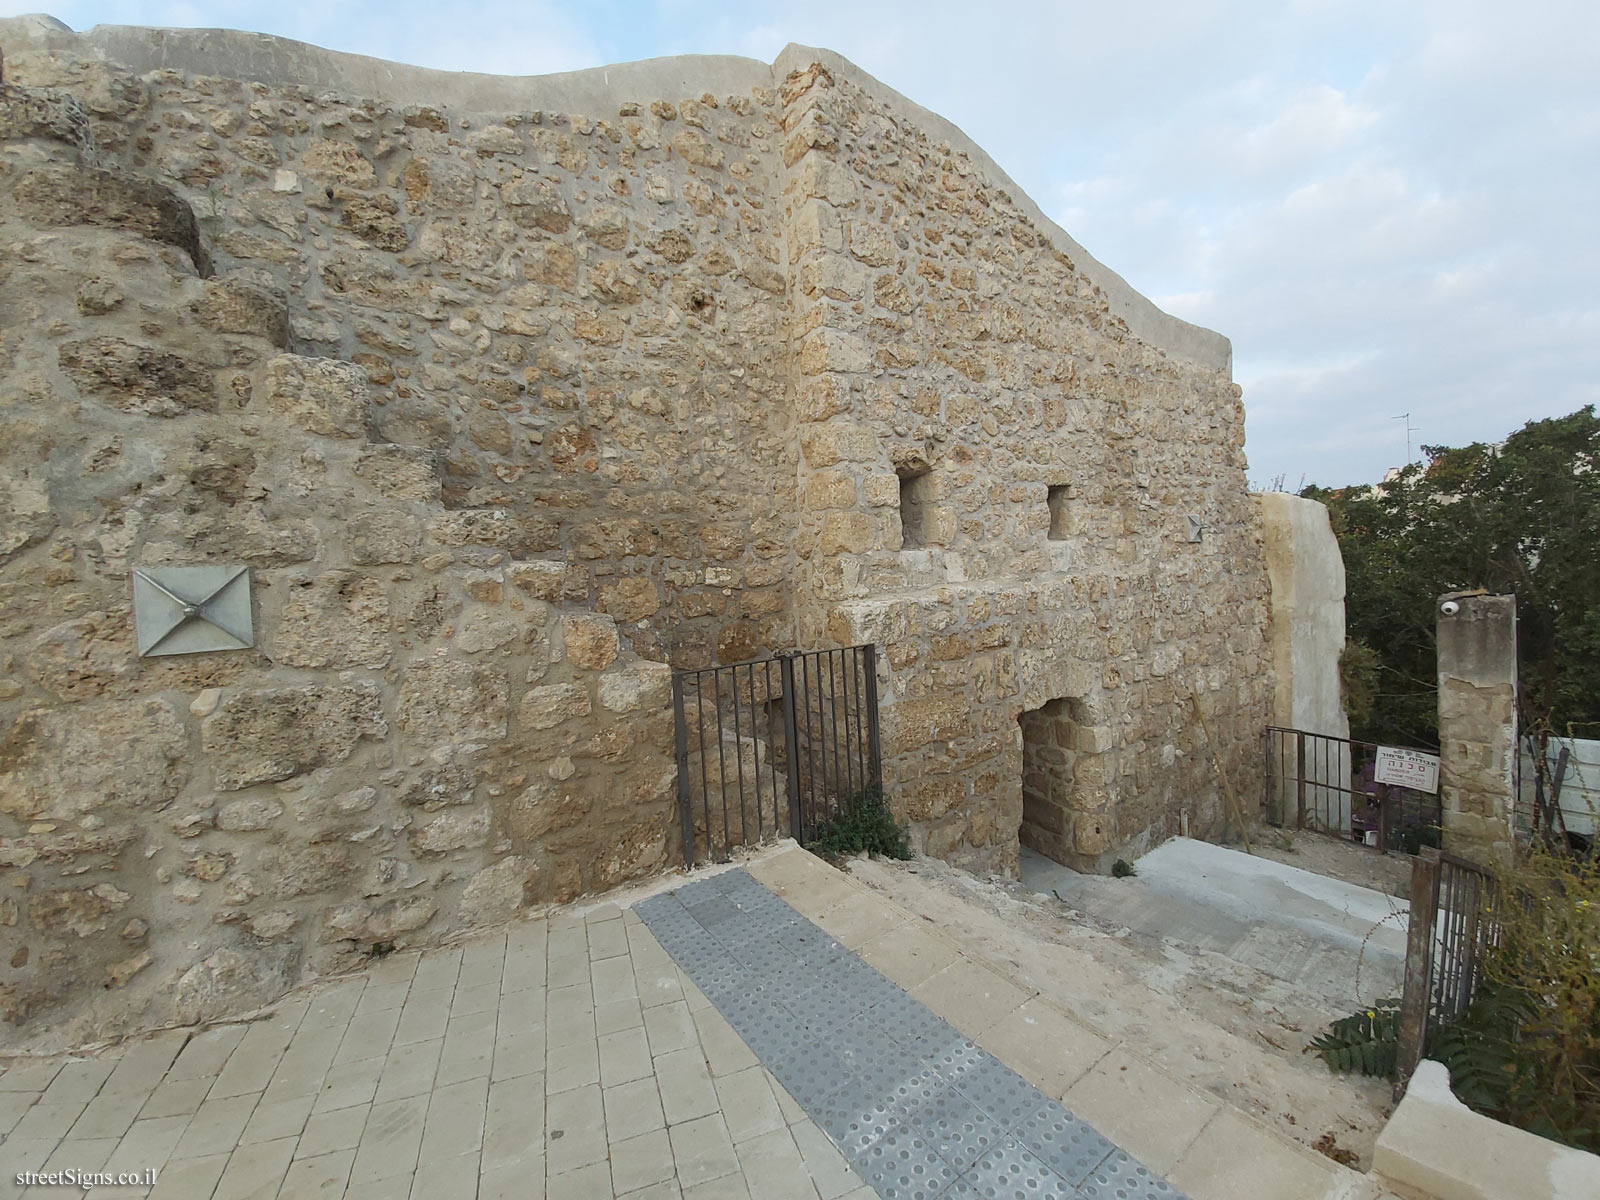 Azor - The Citadel of the Plain - Chateau de Plan - Sprinzak St 12, Azor, Israel